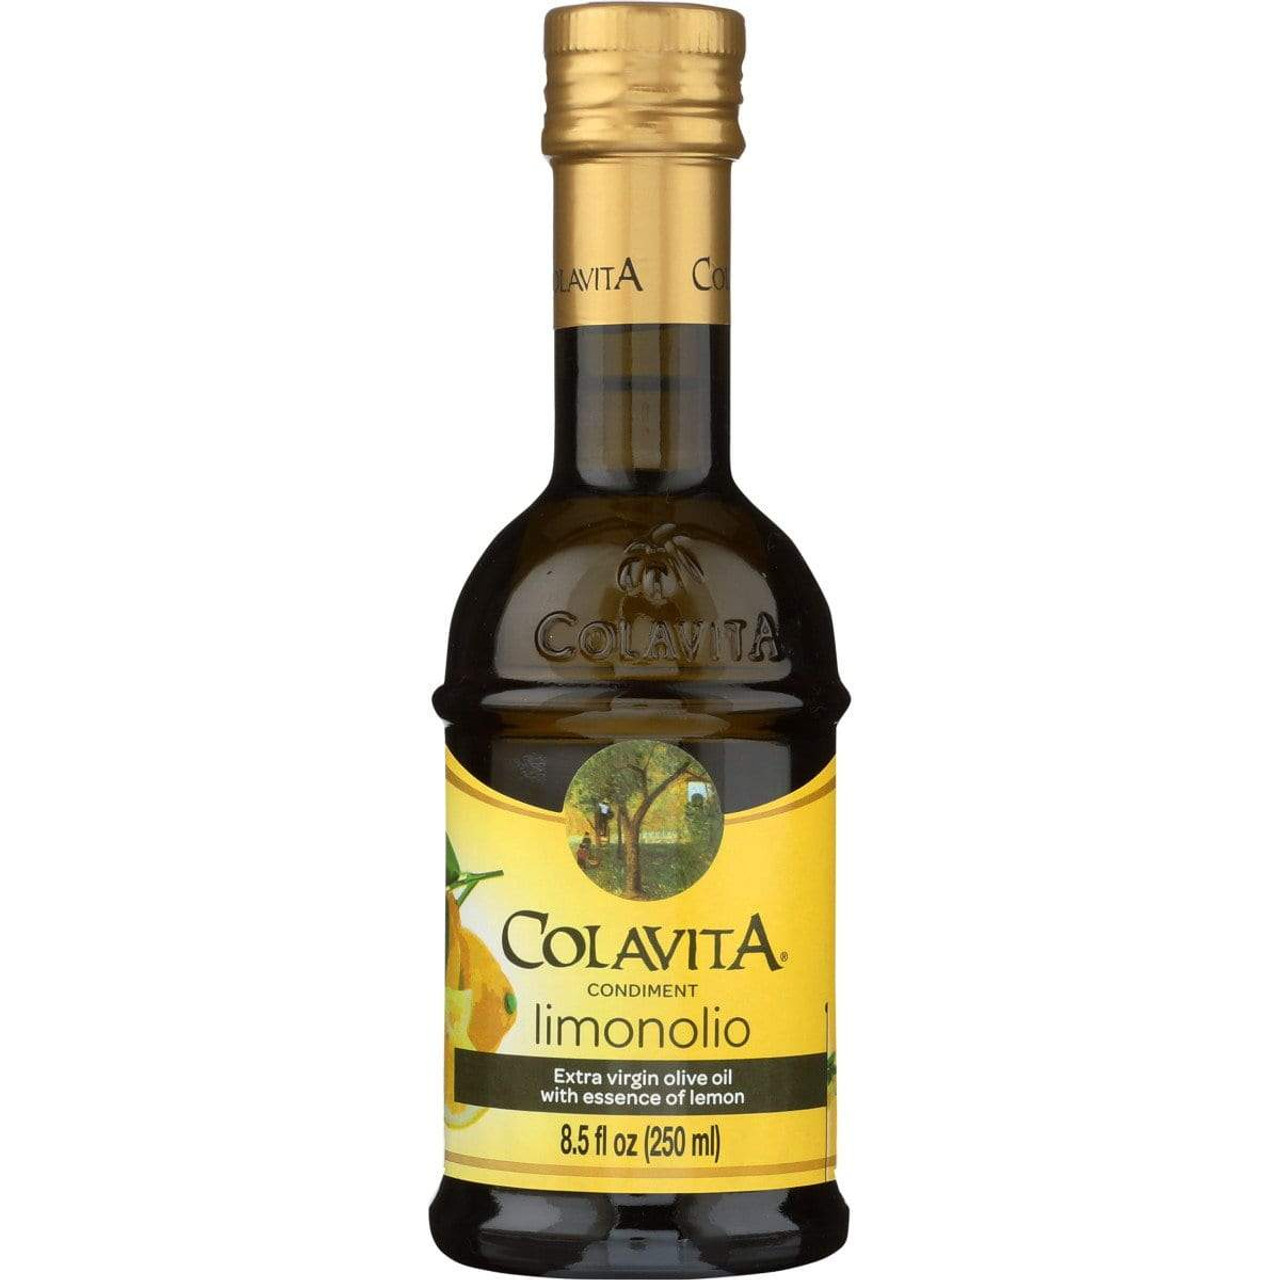 Colavita Extra Virgin Olive Oil infused with Lemon Essence